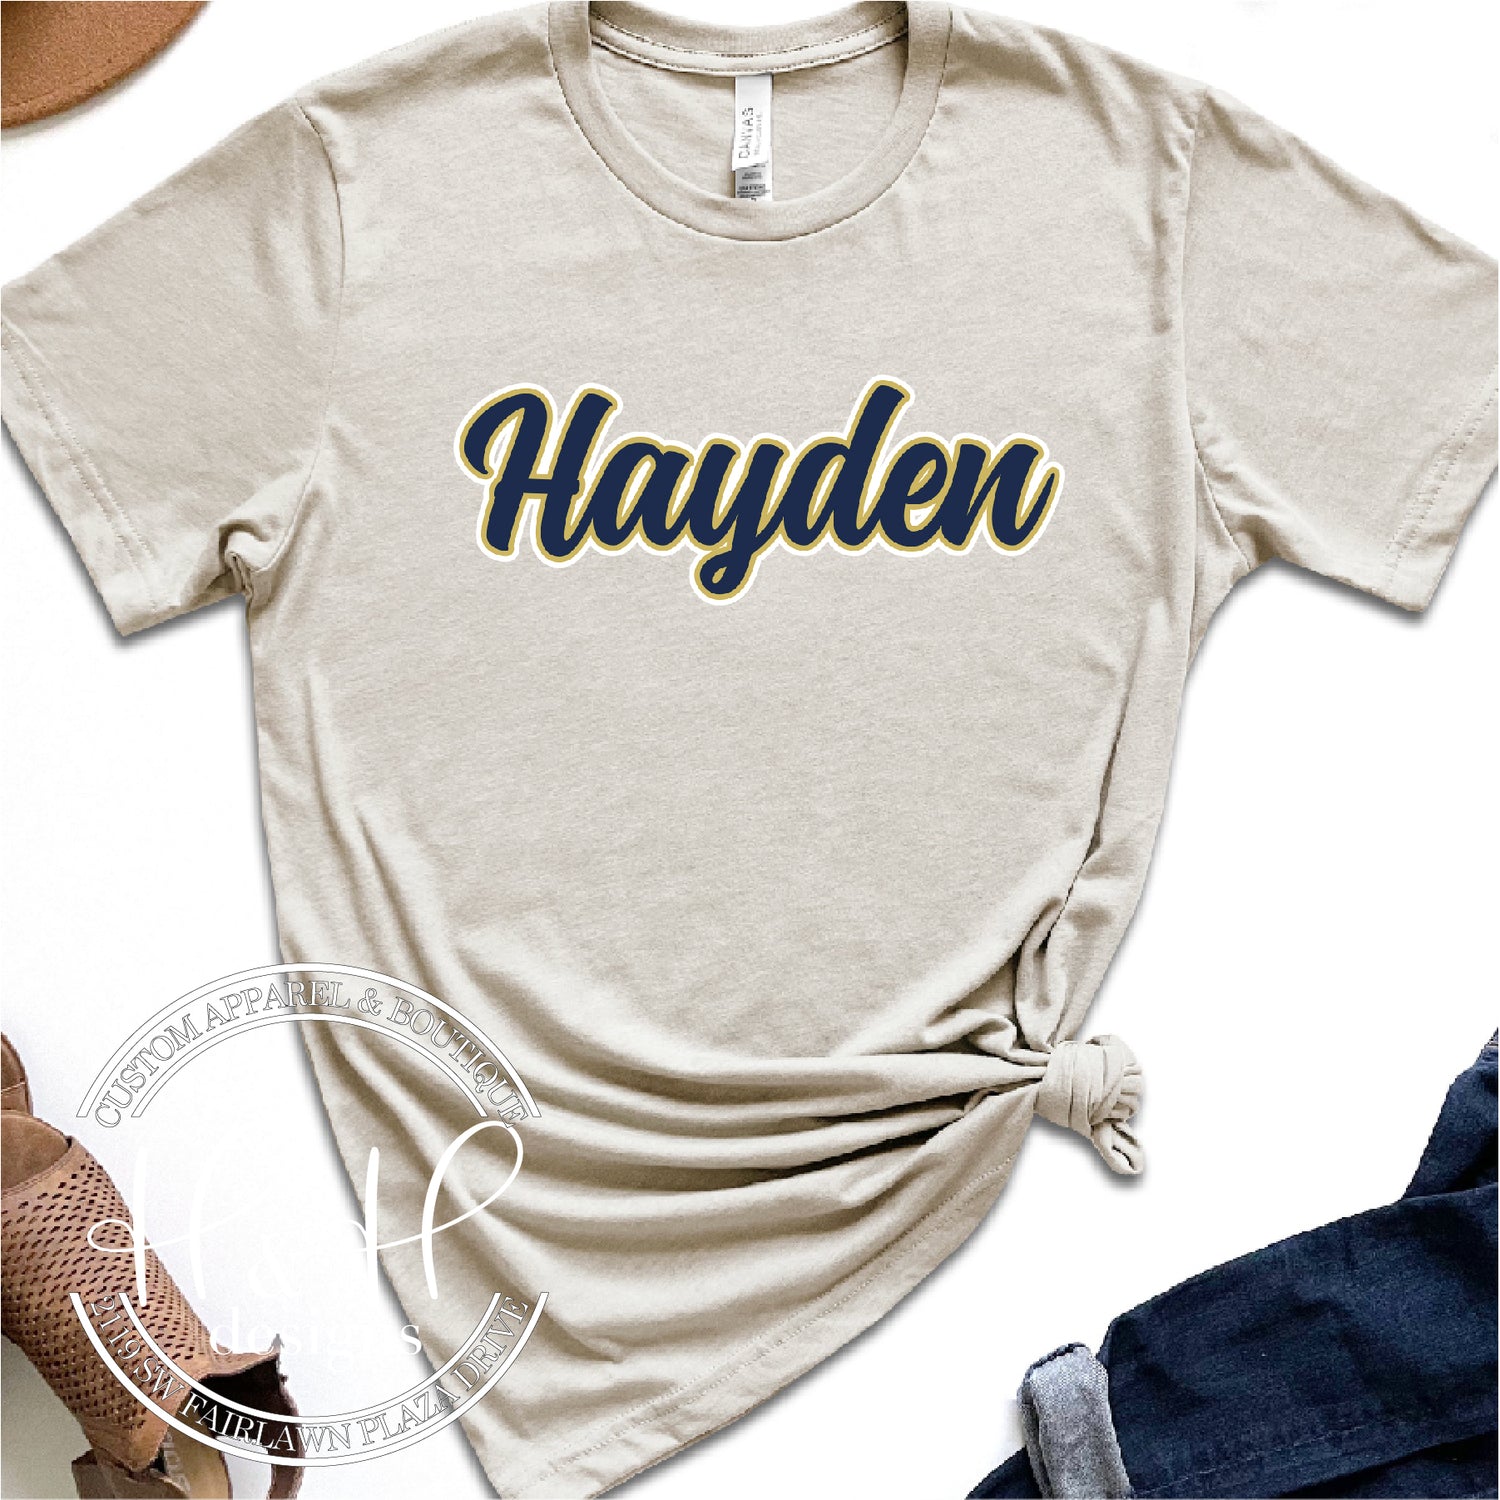 Hayden / Topeka Parochial Schools